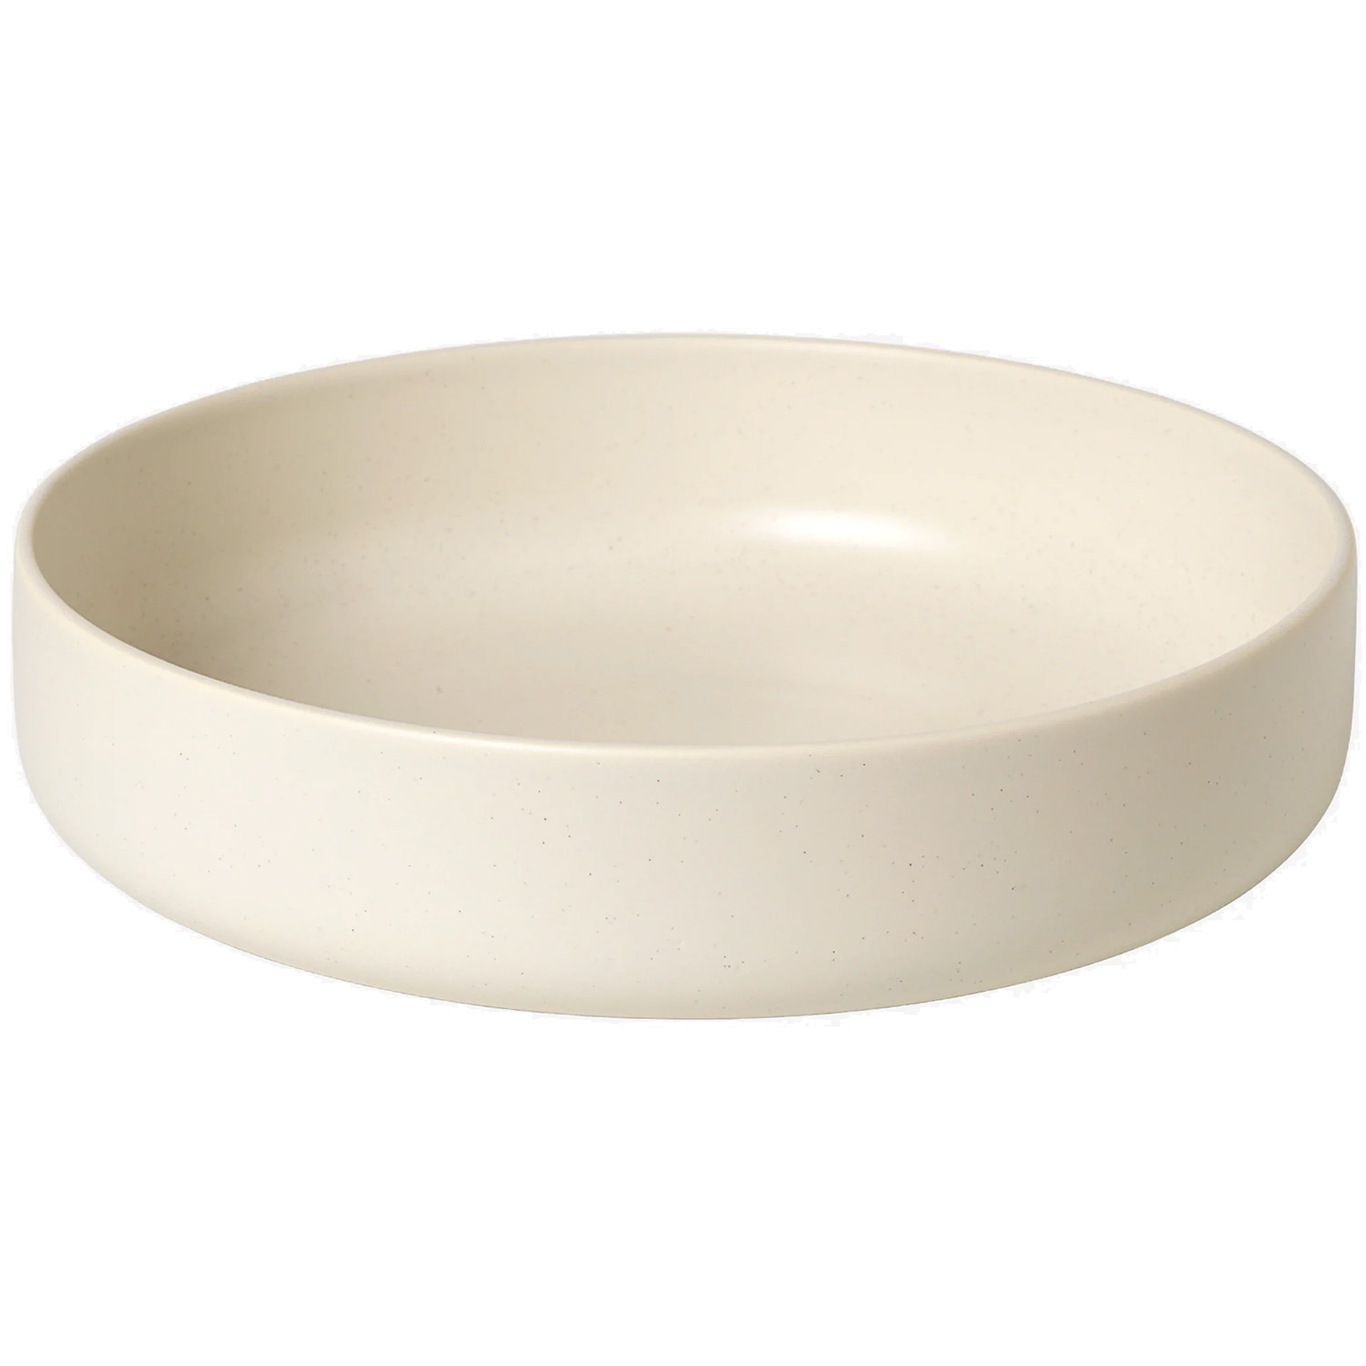 Ceramic Pisu Tray Ø30 cm, Vanilla White